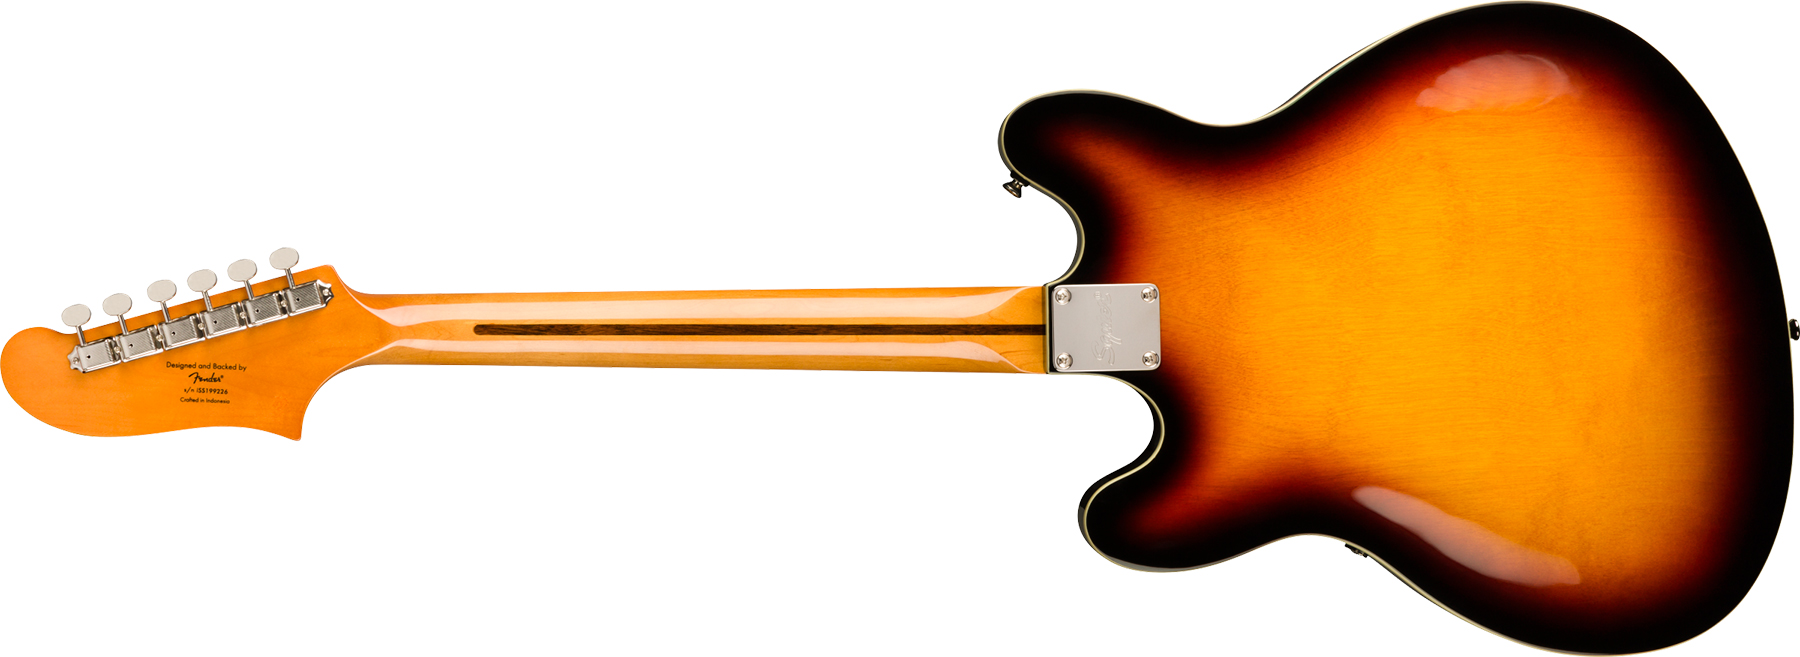 Squier Starcaster Classic Vibe 2019 Hh Ht Mn - 3-color Sunburst - Semi-hollow electric guitar - Variation 1